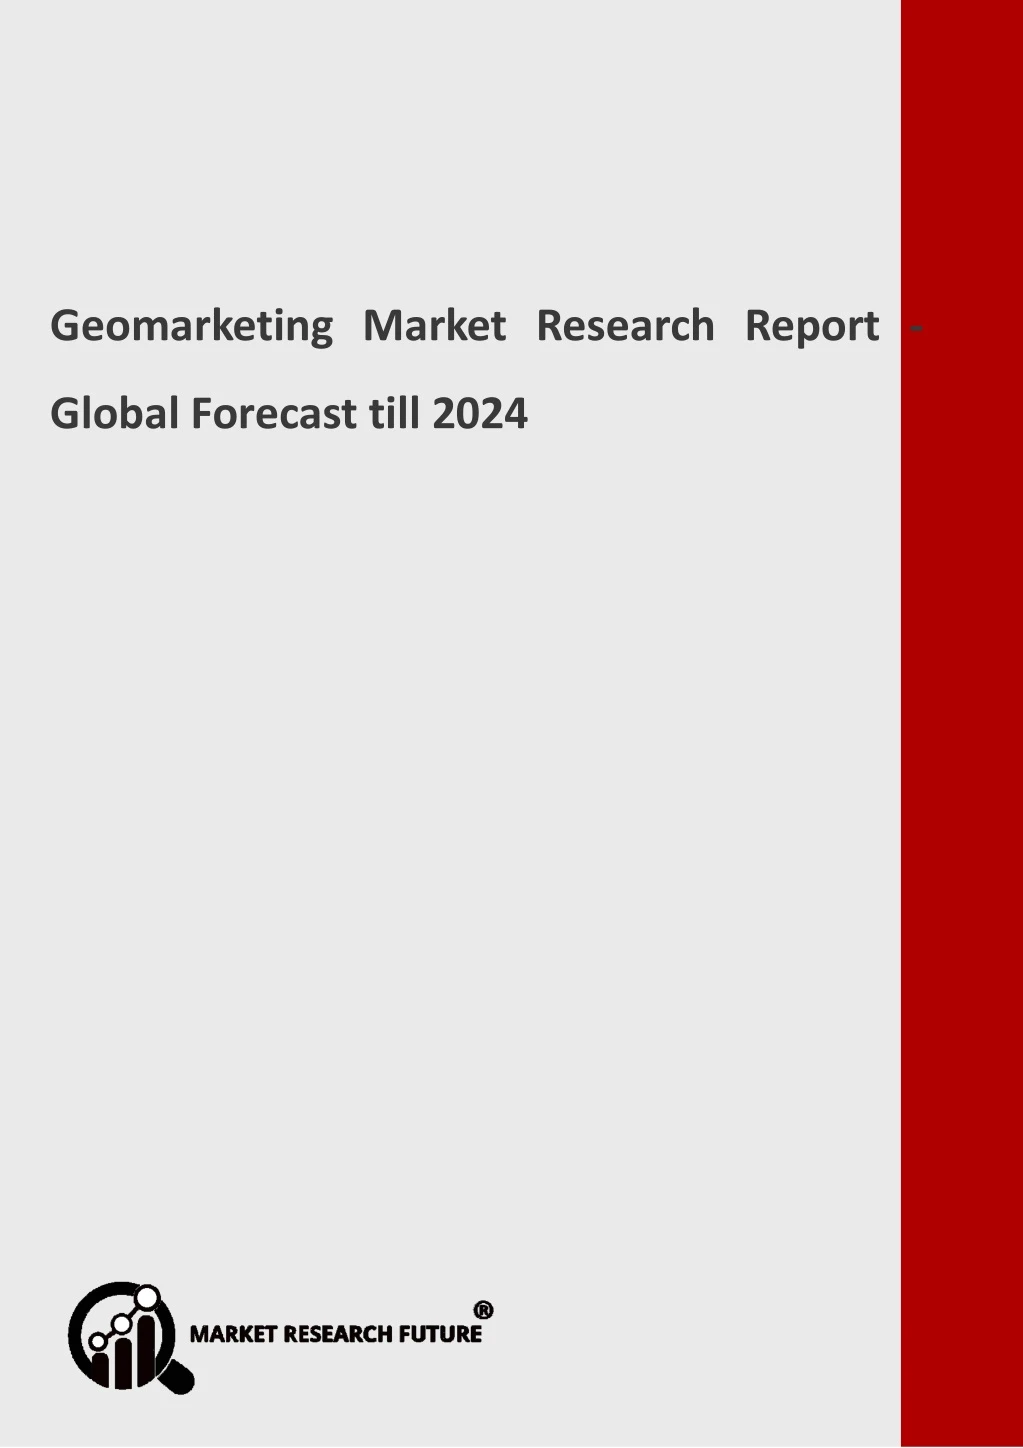 geomarketing market research report global